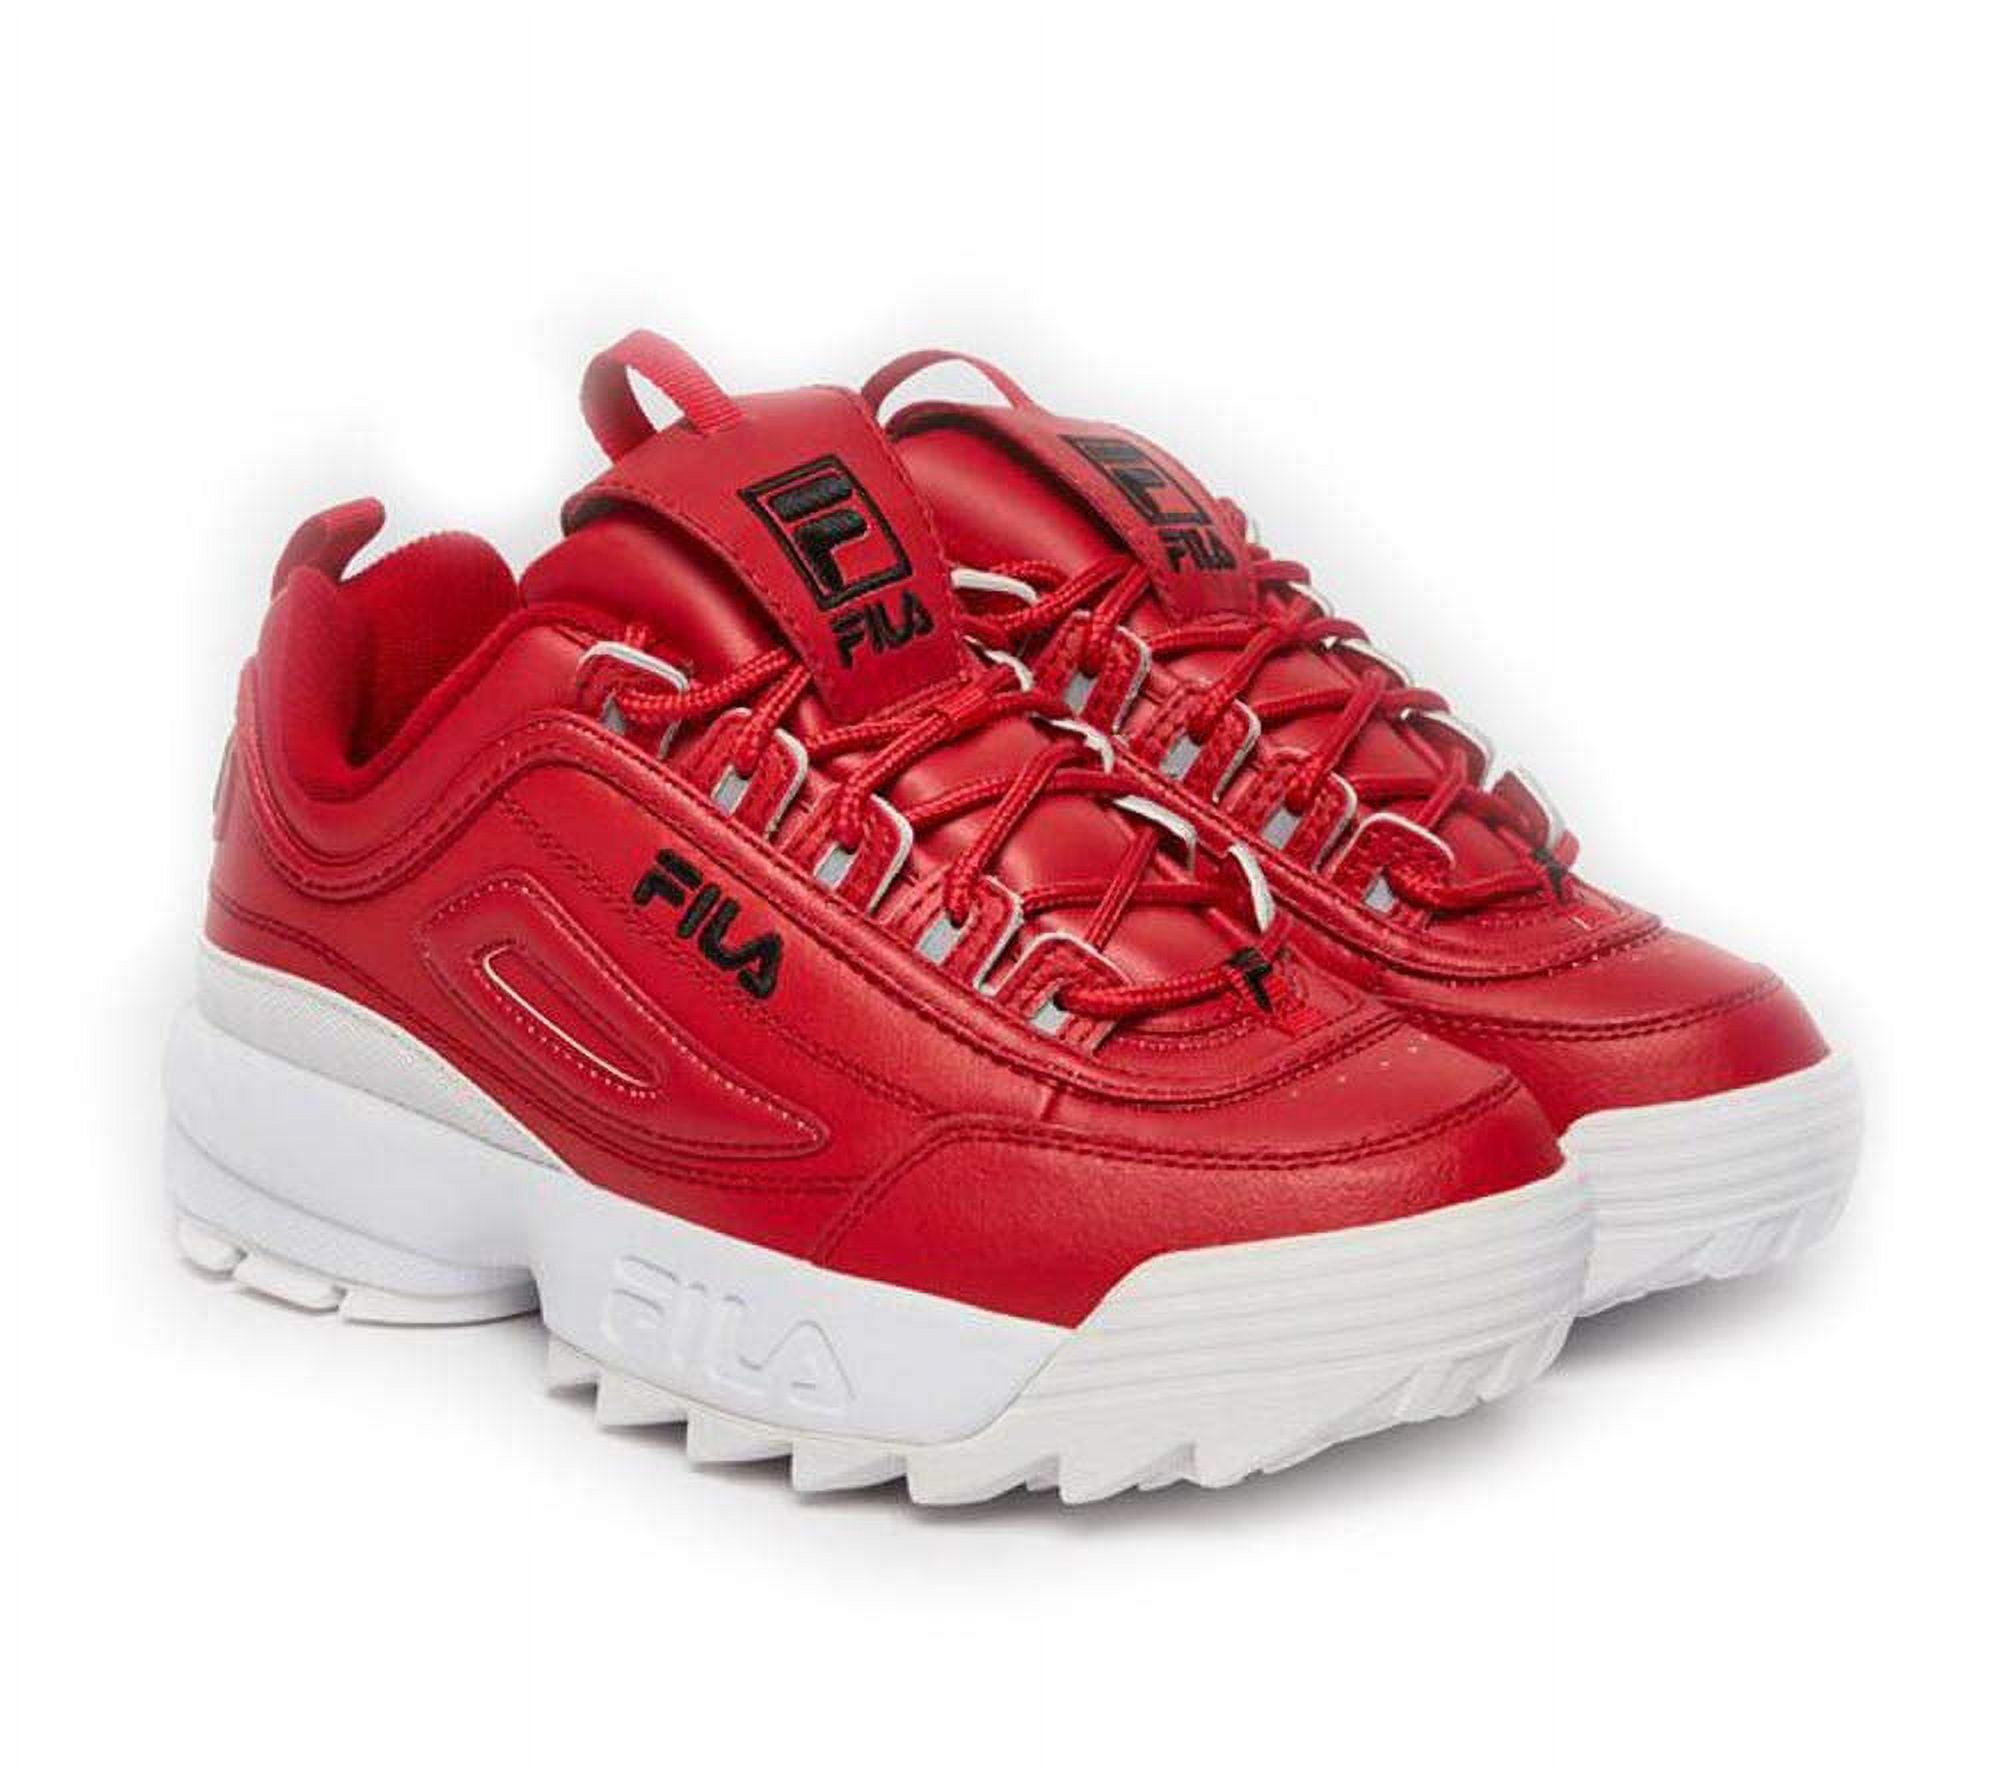 Fila Women's DISRUPTOR II PREMIUM Red Sneakers